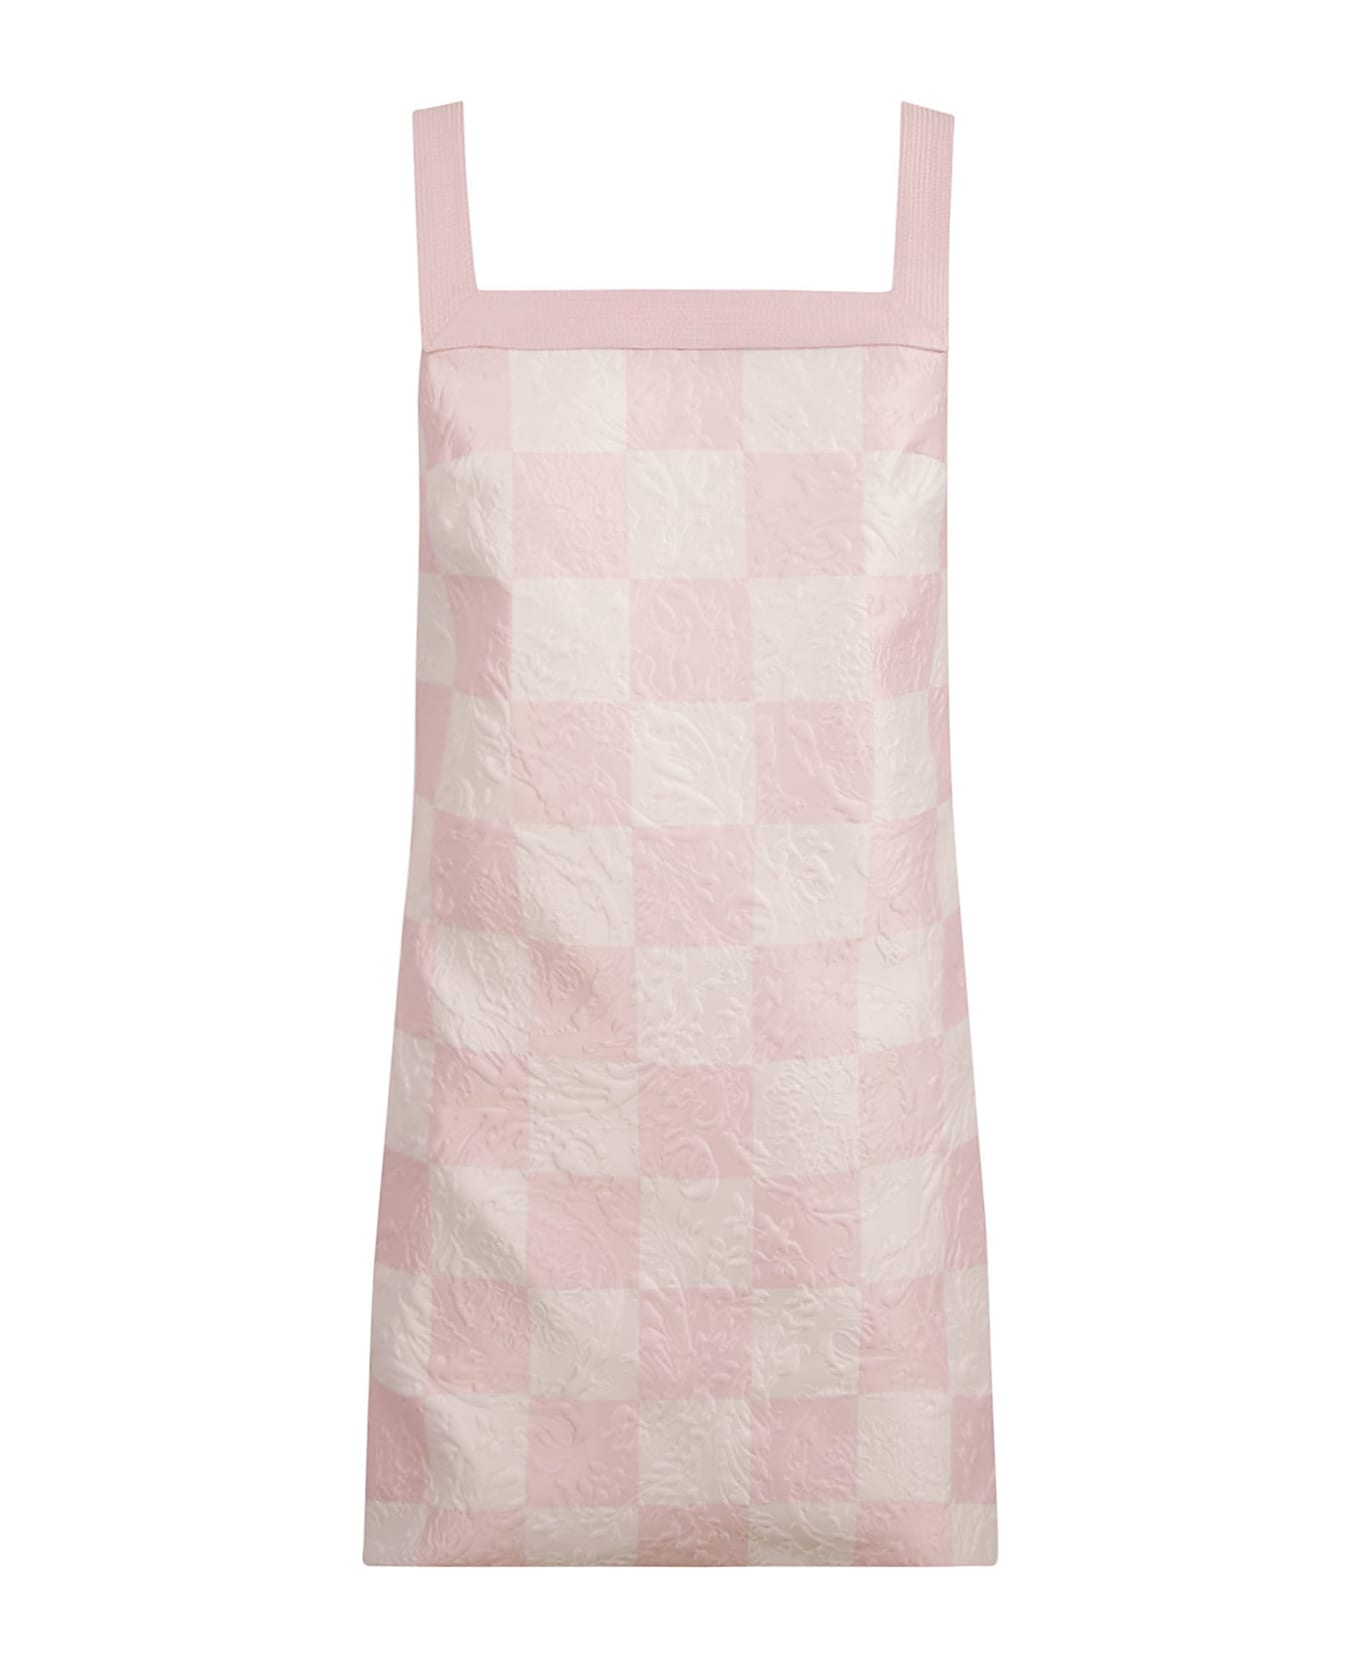 Versace Check Sleeveless Dress - Pink/White